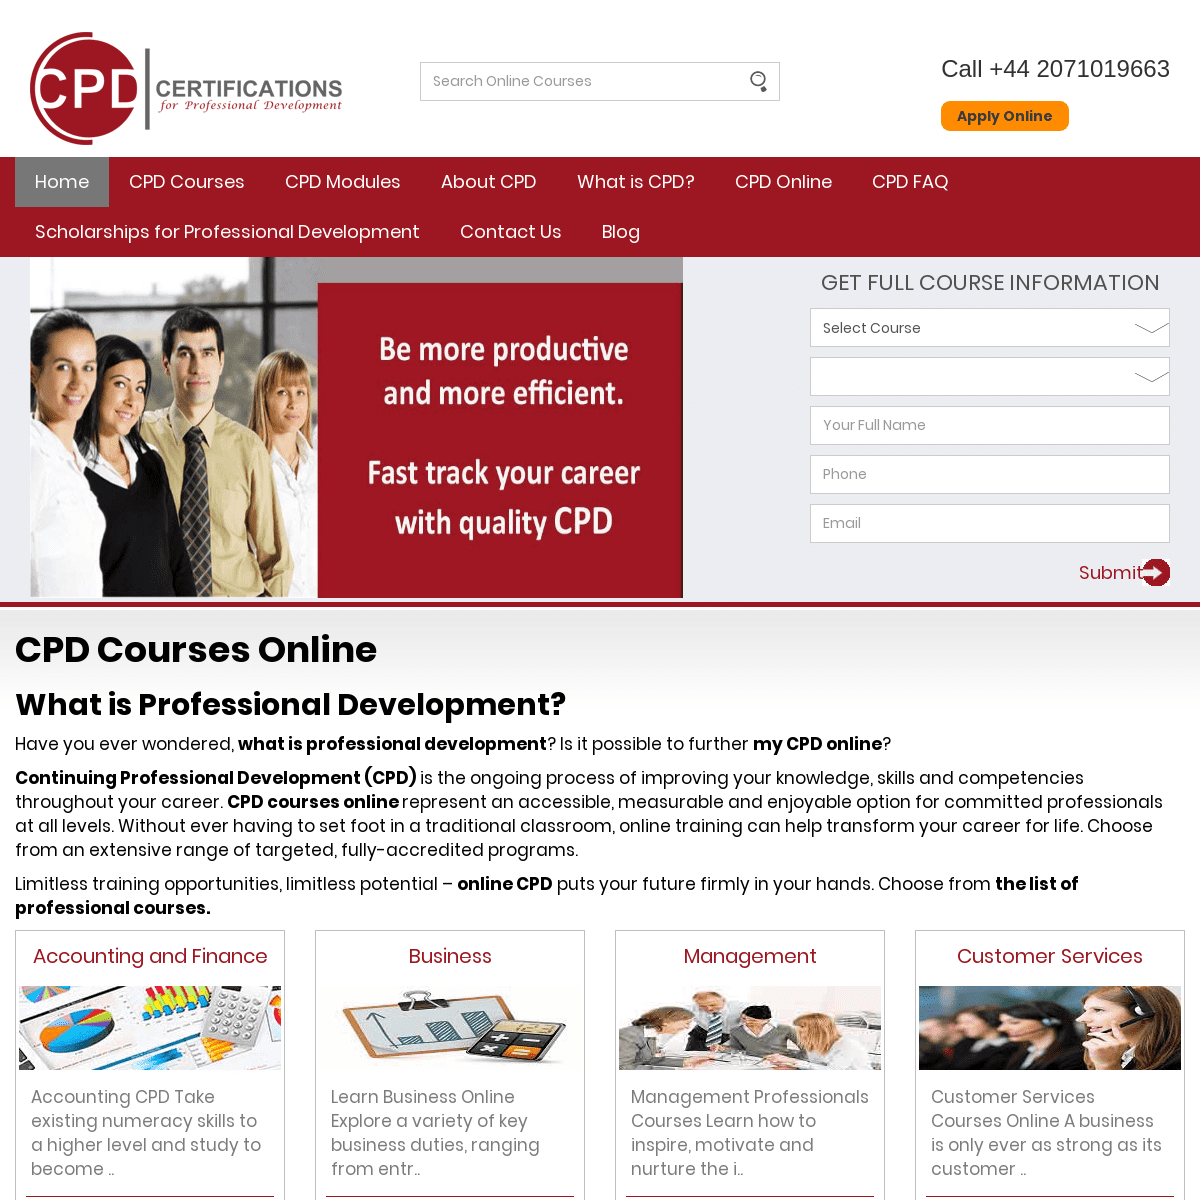 A complete backup of cpdcourses.com